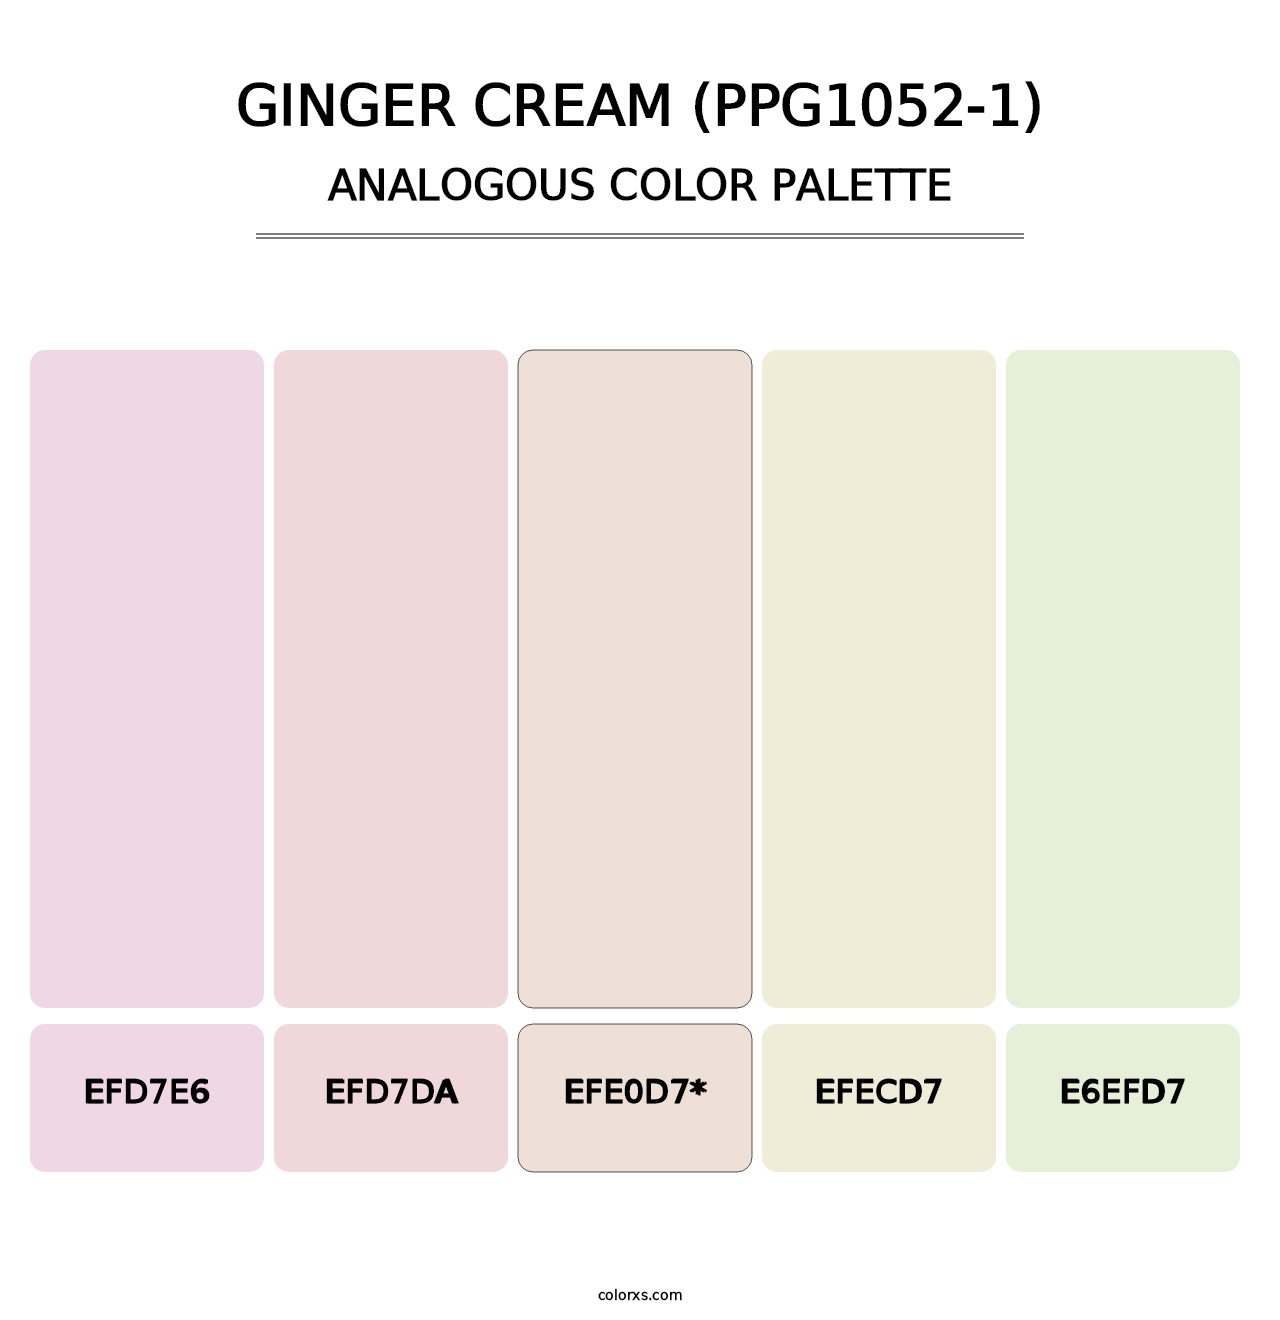 Ginger Cream (PPG1052-1) - Analogous Color Palette